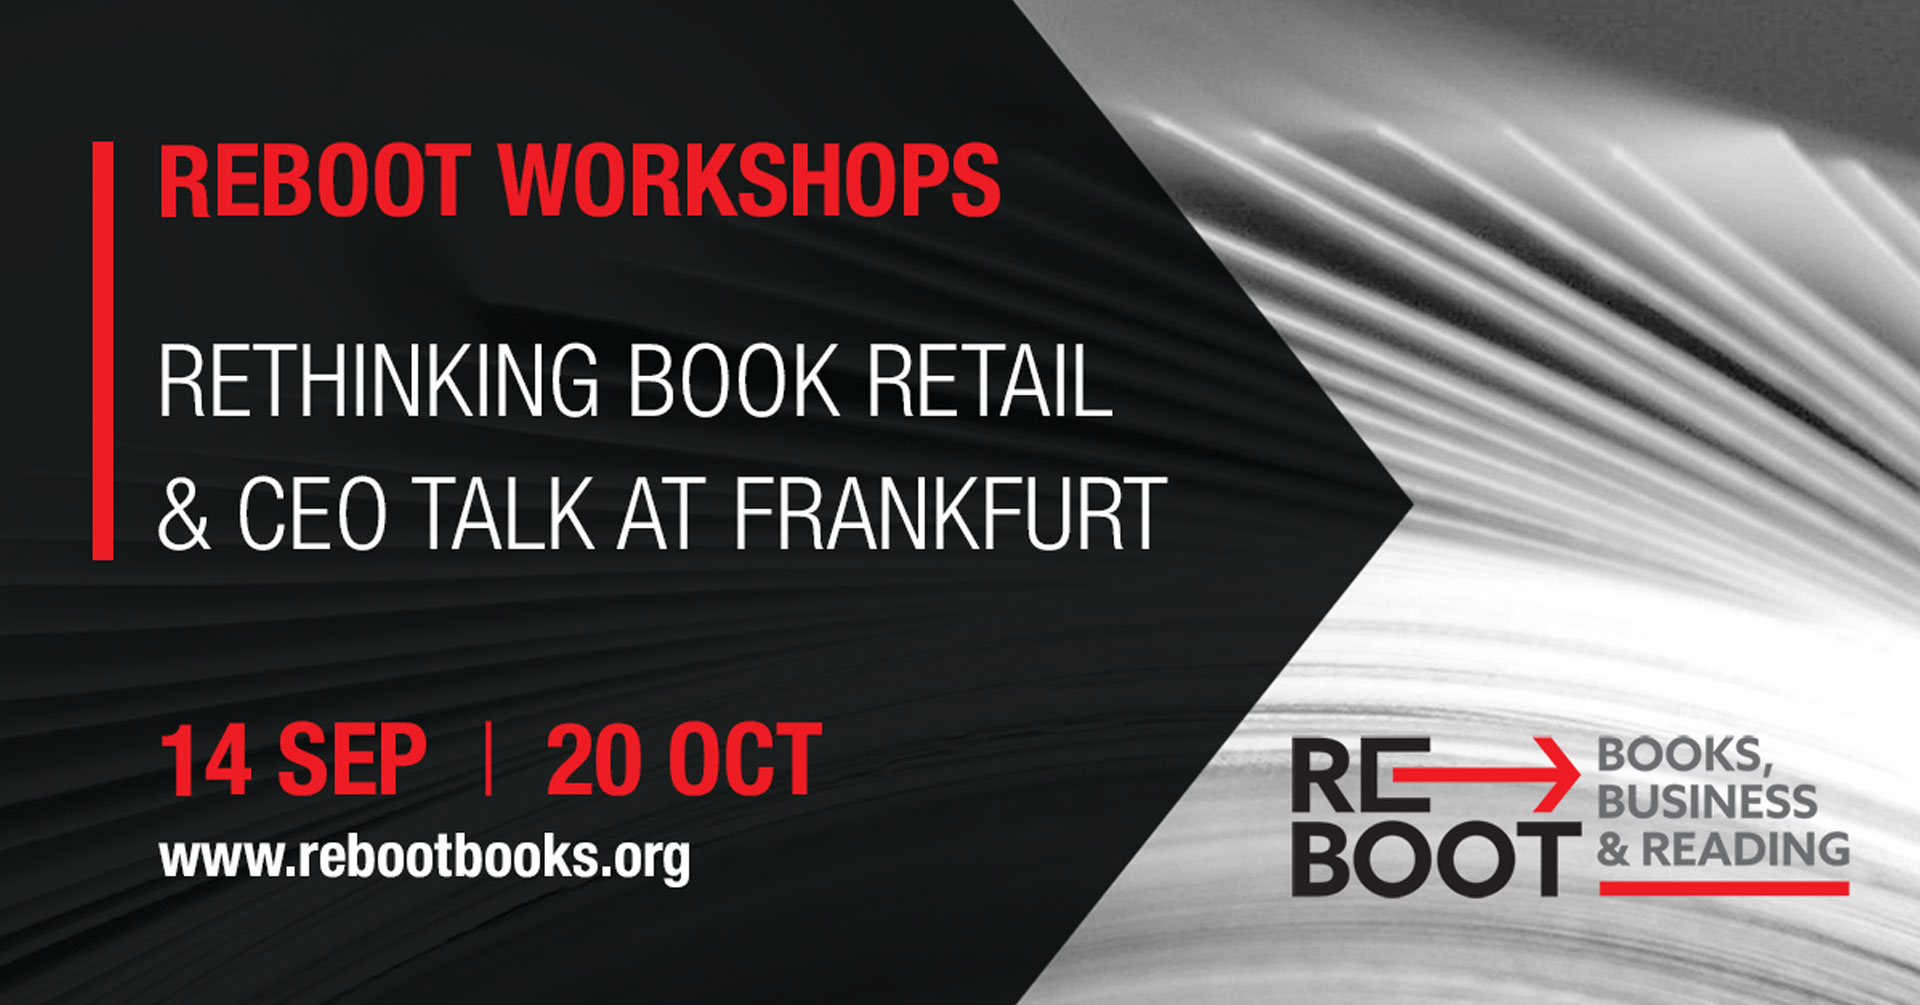 ReBoot Books, Business & Reading, 4o διεθνές, online workshop